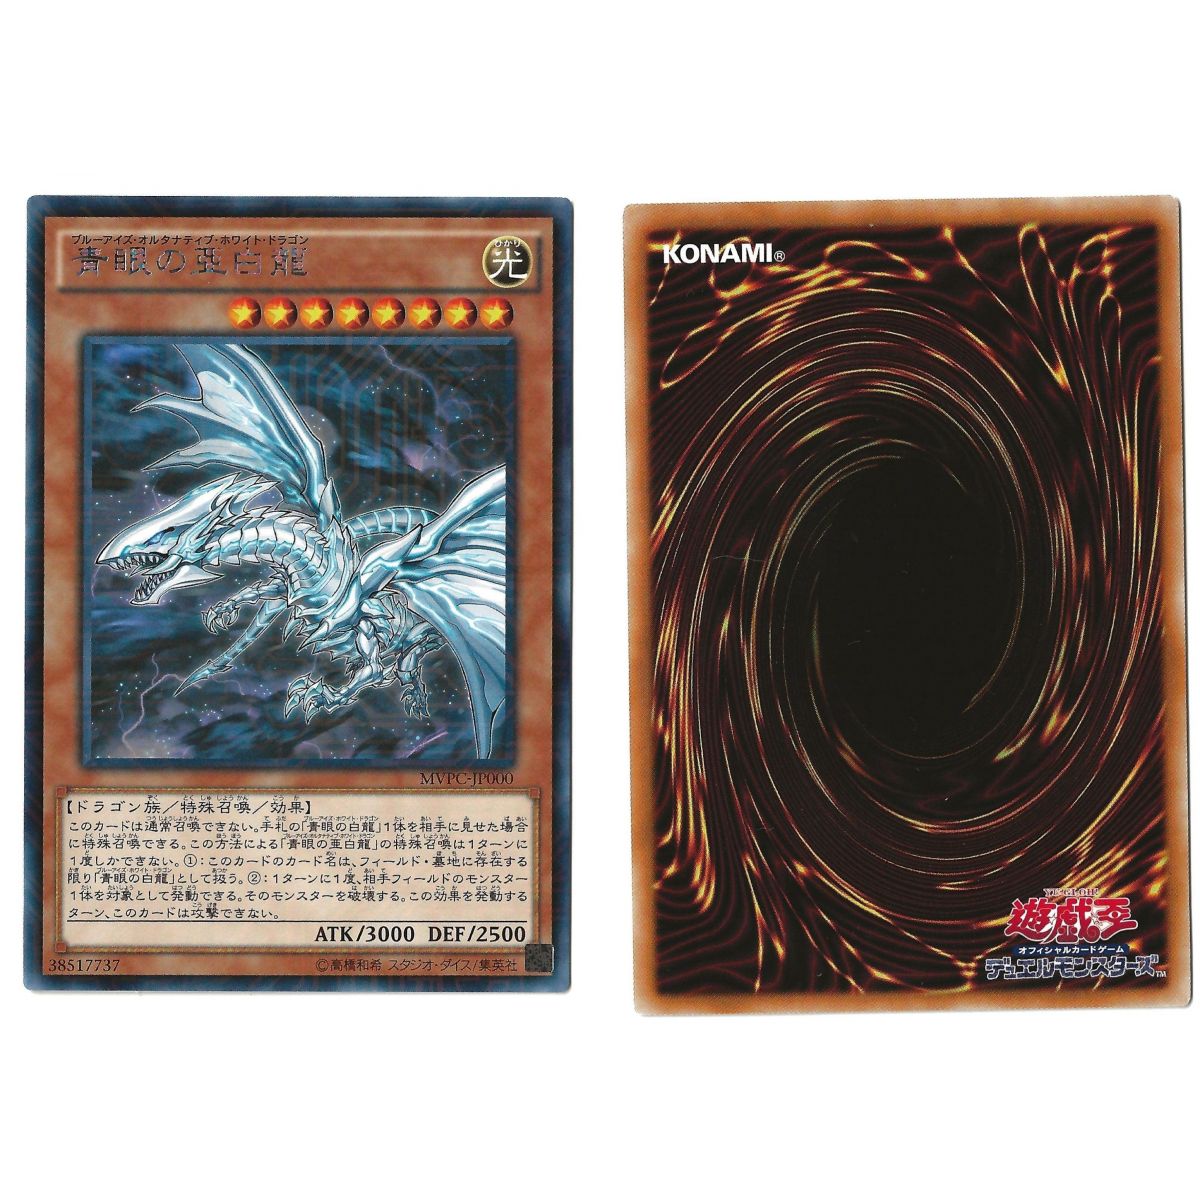 Item Blue-Eyes Alternative White Dragon (2) MVPC-JP000 Yu-Gi-Oh! The Dark Dimensions Advance Ticket Promotional Cards Kaiba Corp Rare